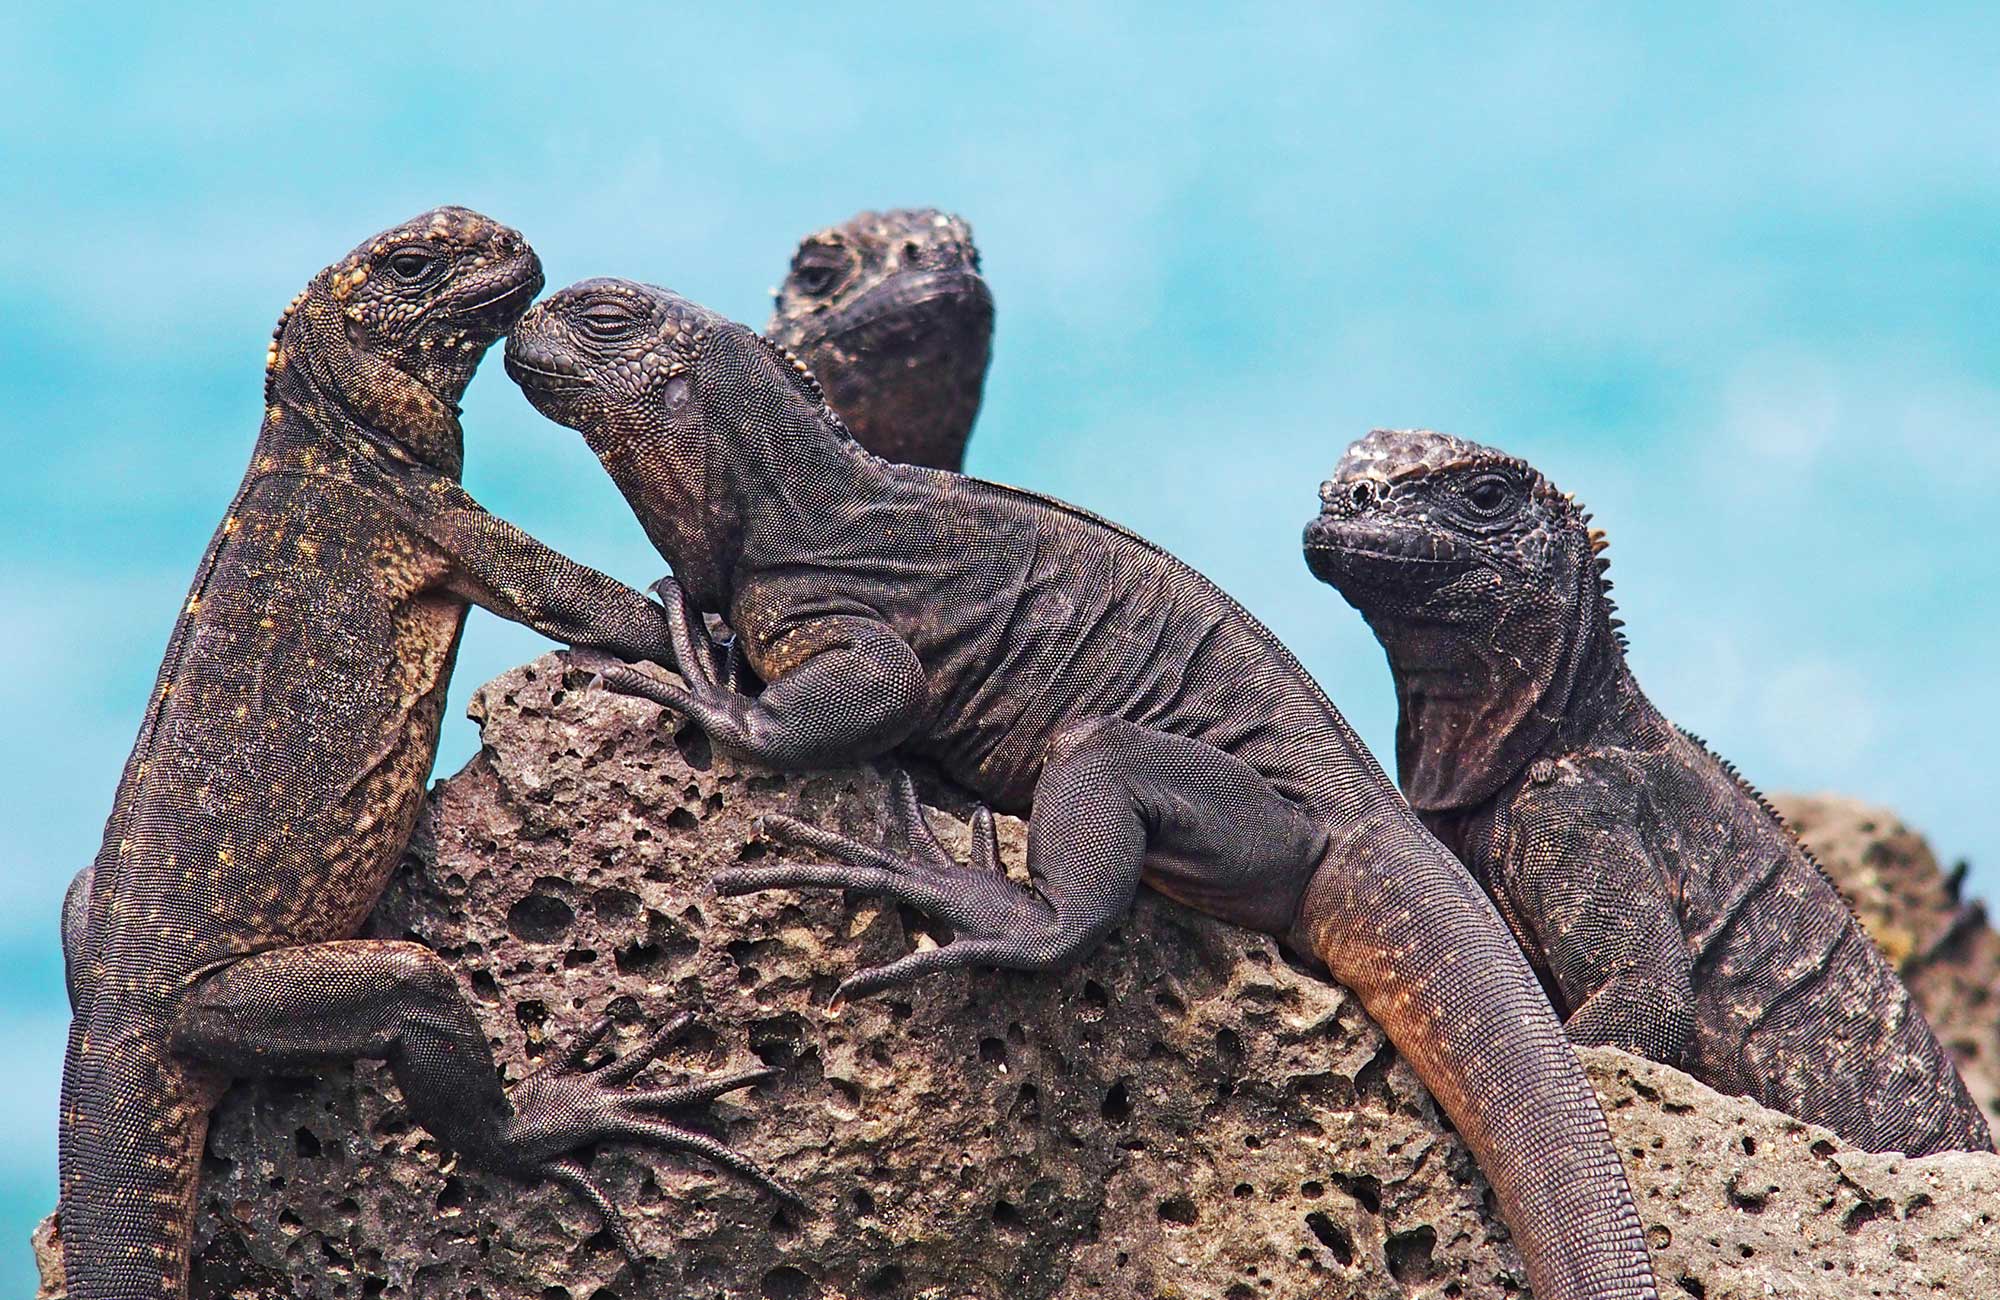 Travel like Darwin and spot wildlife on the Galapagos | KILROY